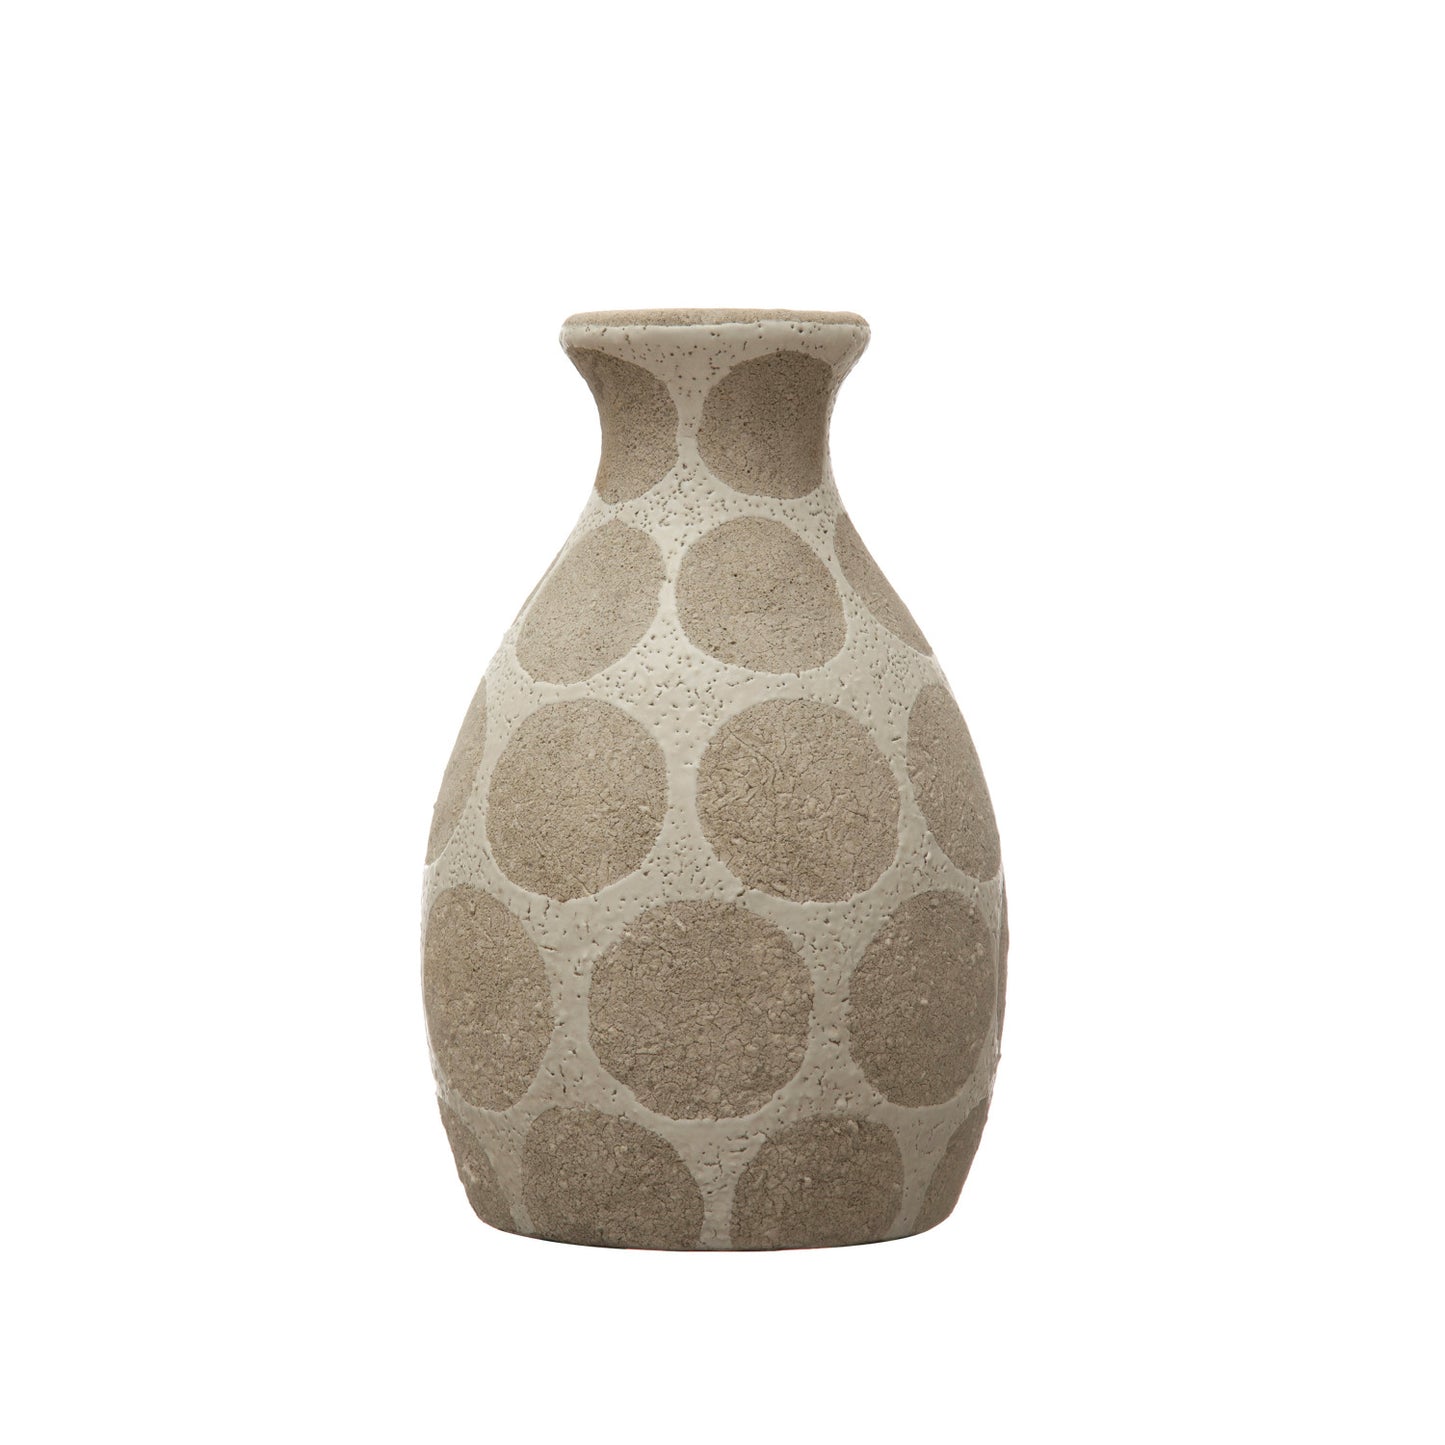 Tan Vase with Wax Dose, 4x6